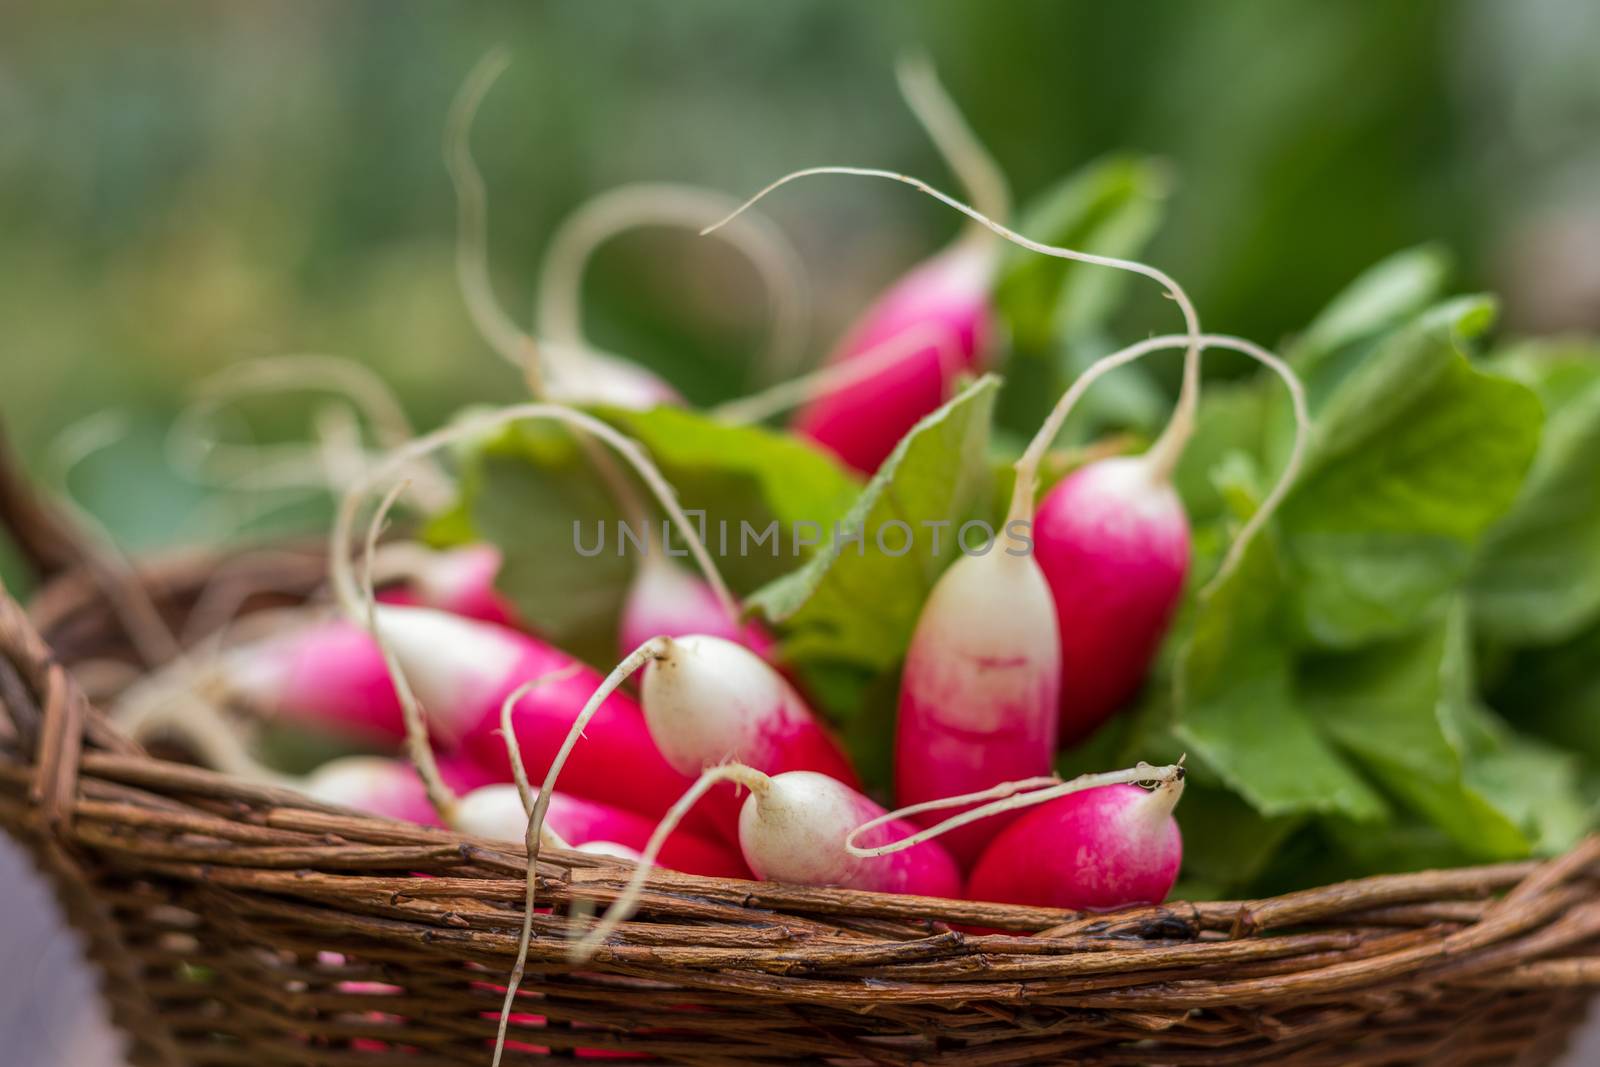 Bunch of radishes in a wicker basket by ArtSvitlyna